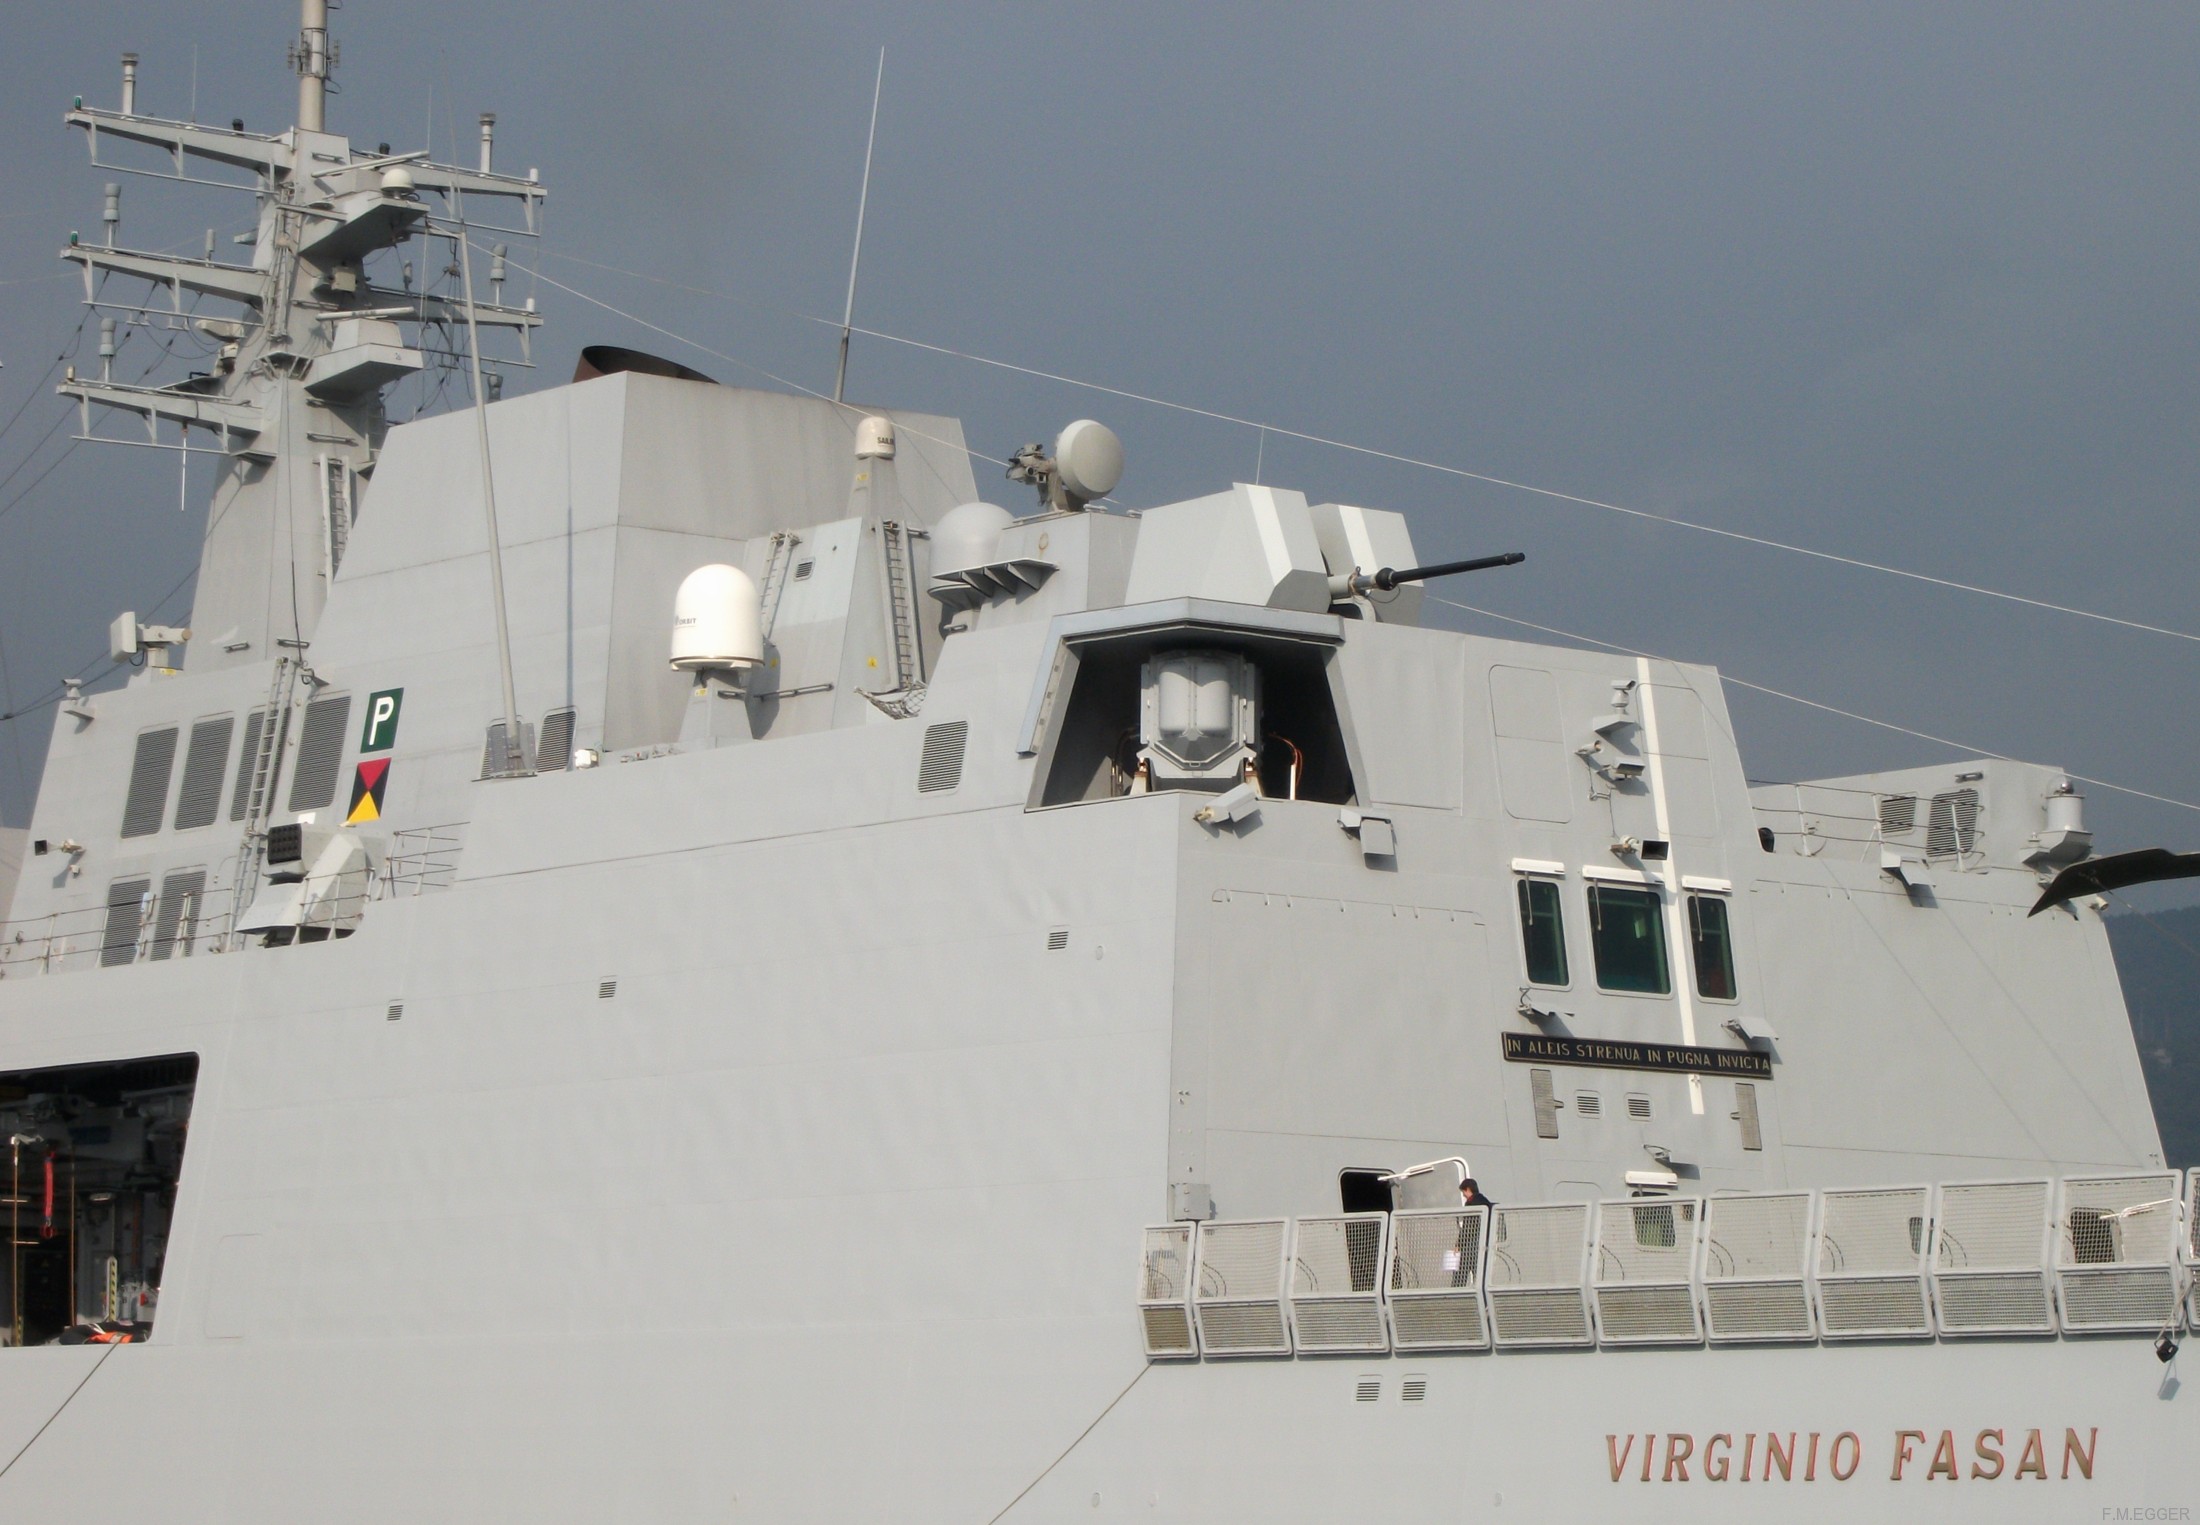 f-591 virginio fasan its nave bergamini fremm class guided missile frigate italian navy marina militare x21 trieste port